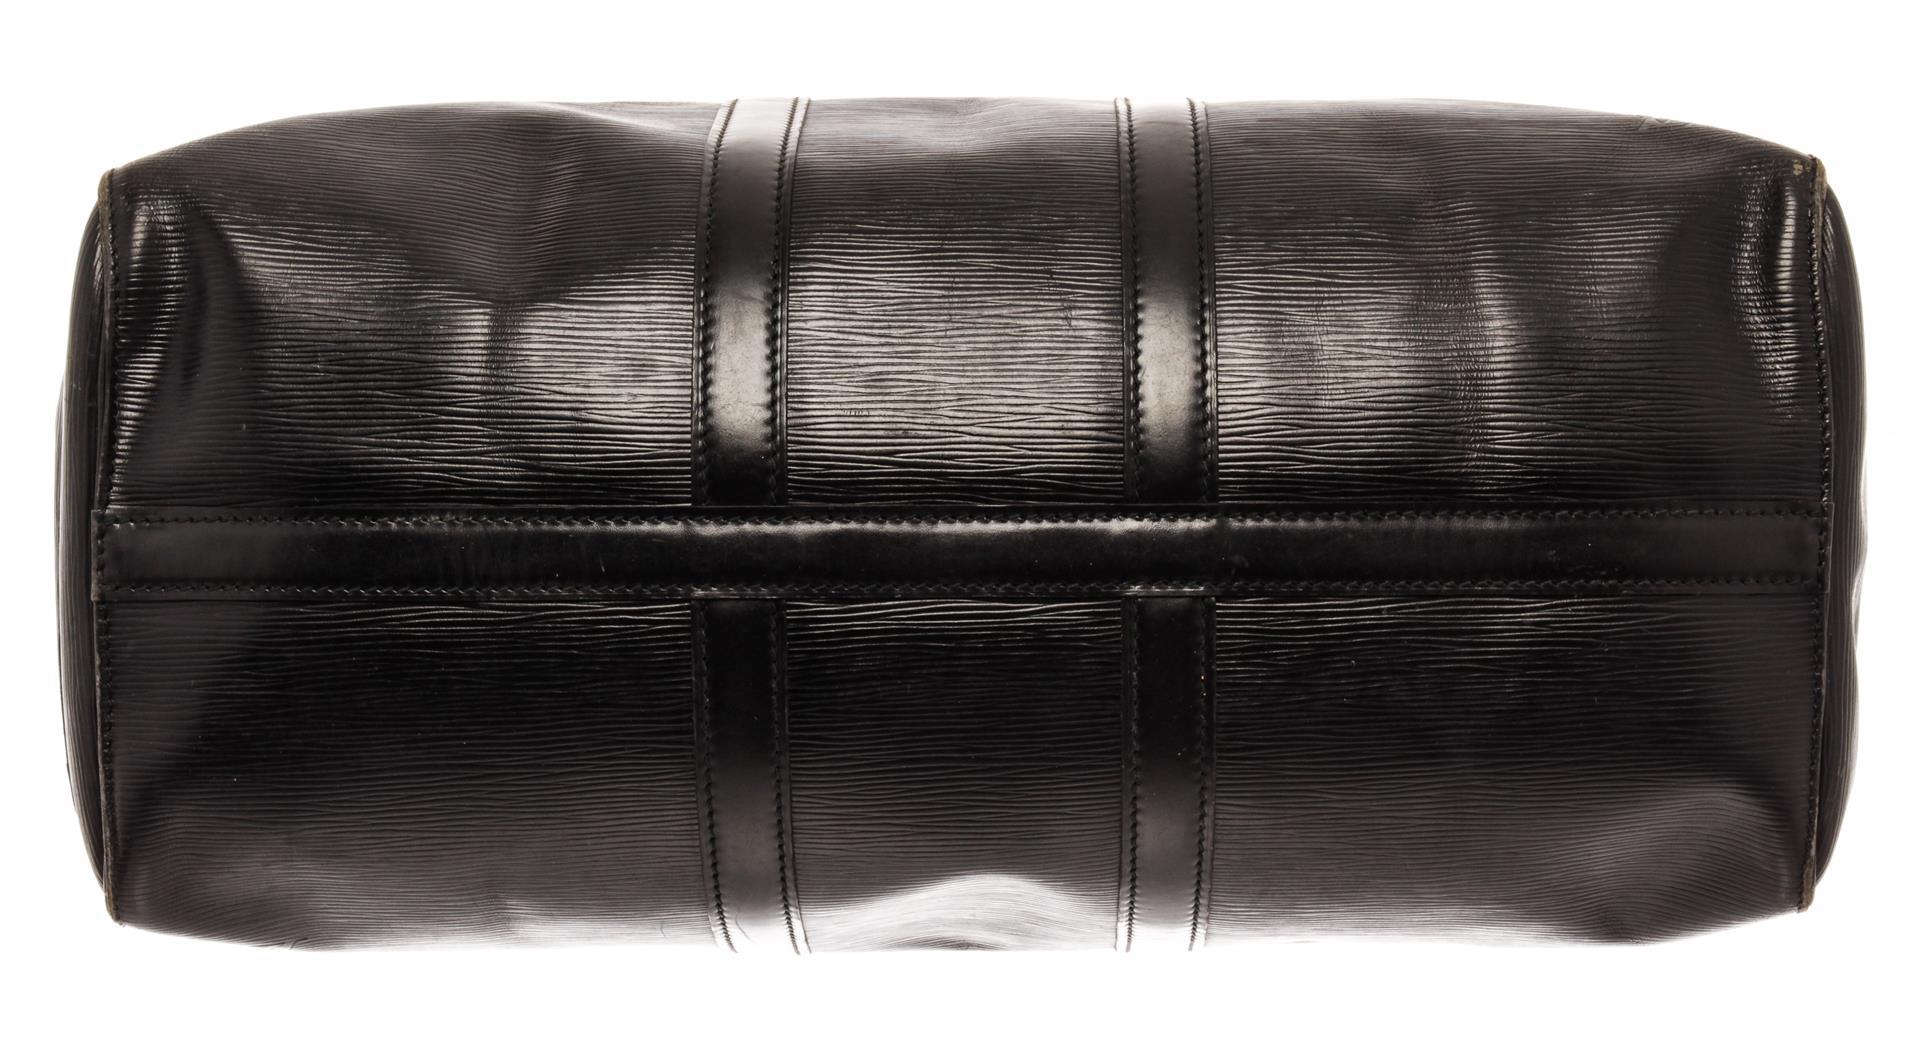 Louis Vuitton Black Epi Leather Keepall 50 Weekend/Travel Bag